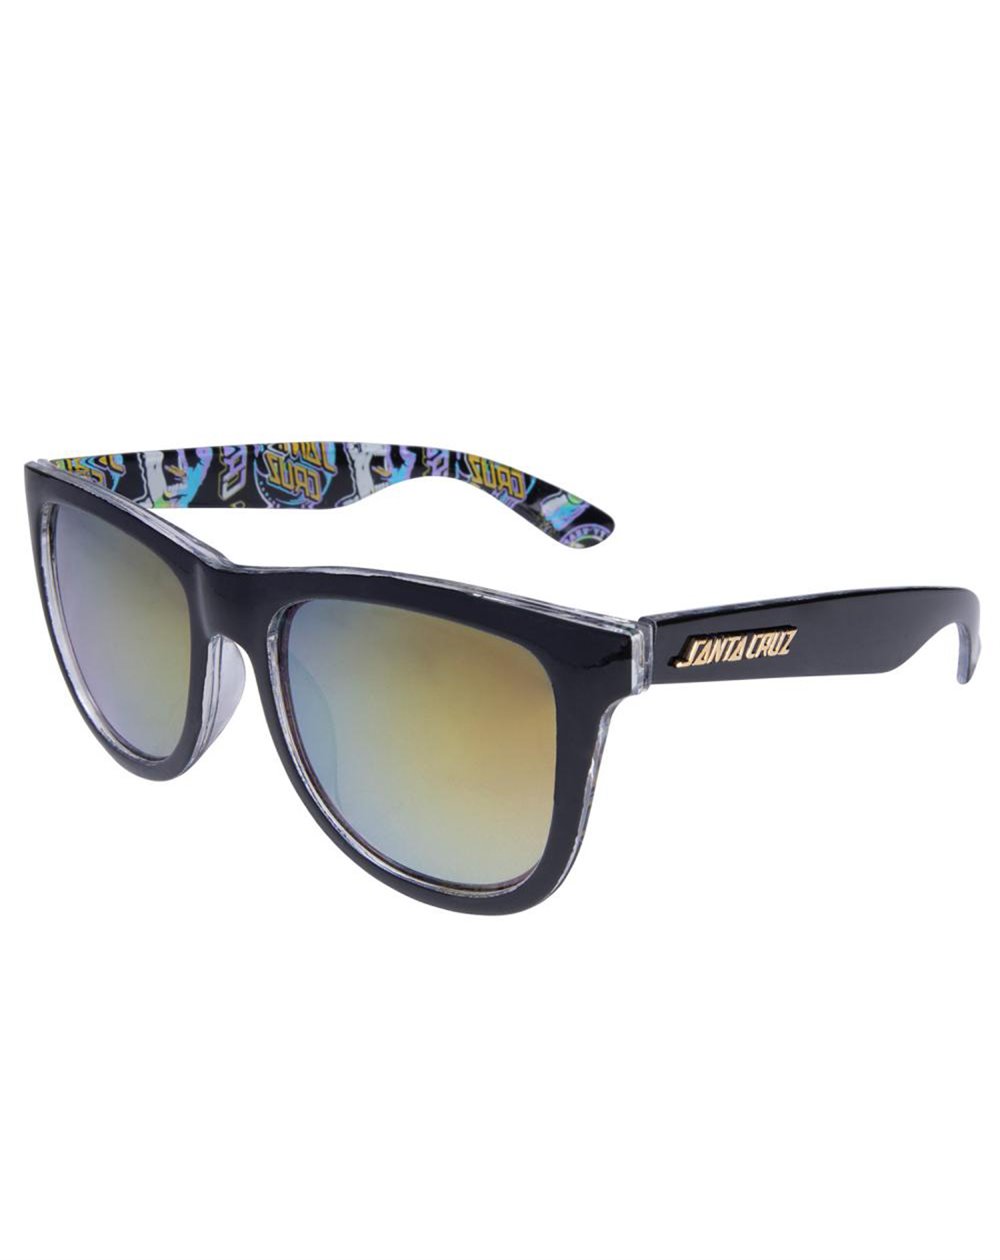 Santa Cruz Men's Sunglasses Holo Black